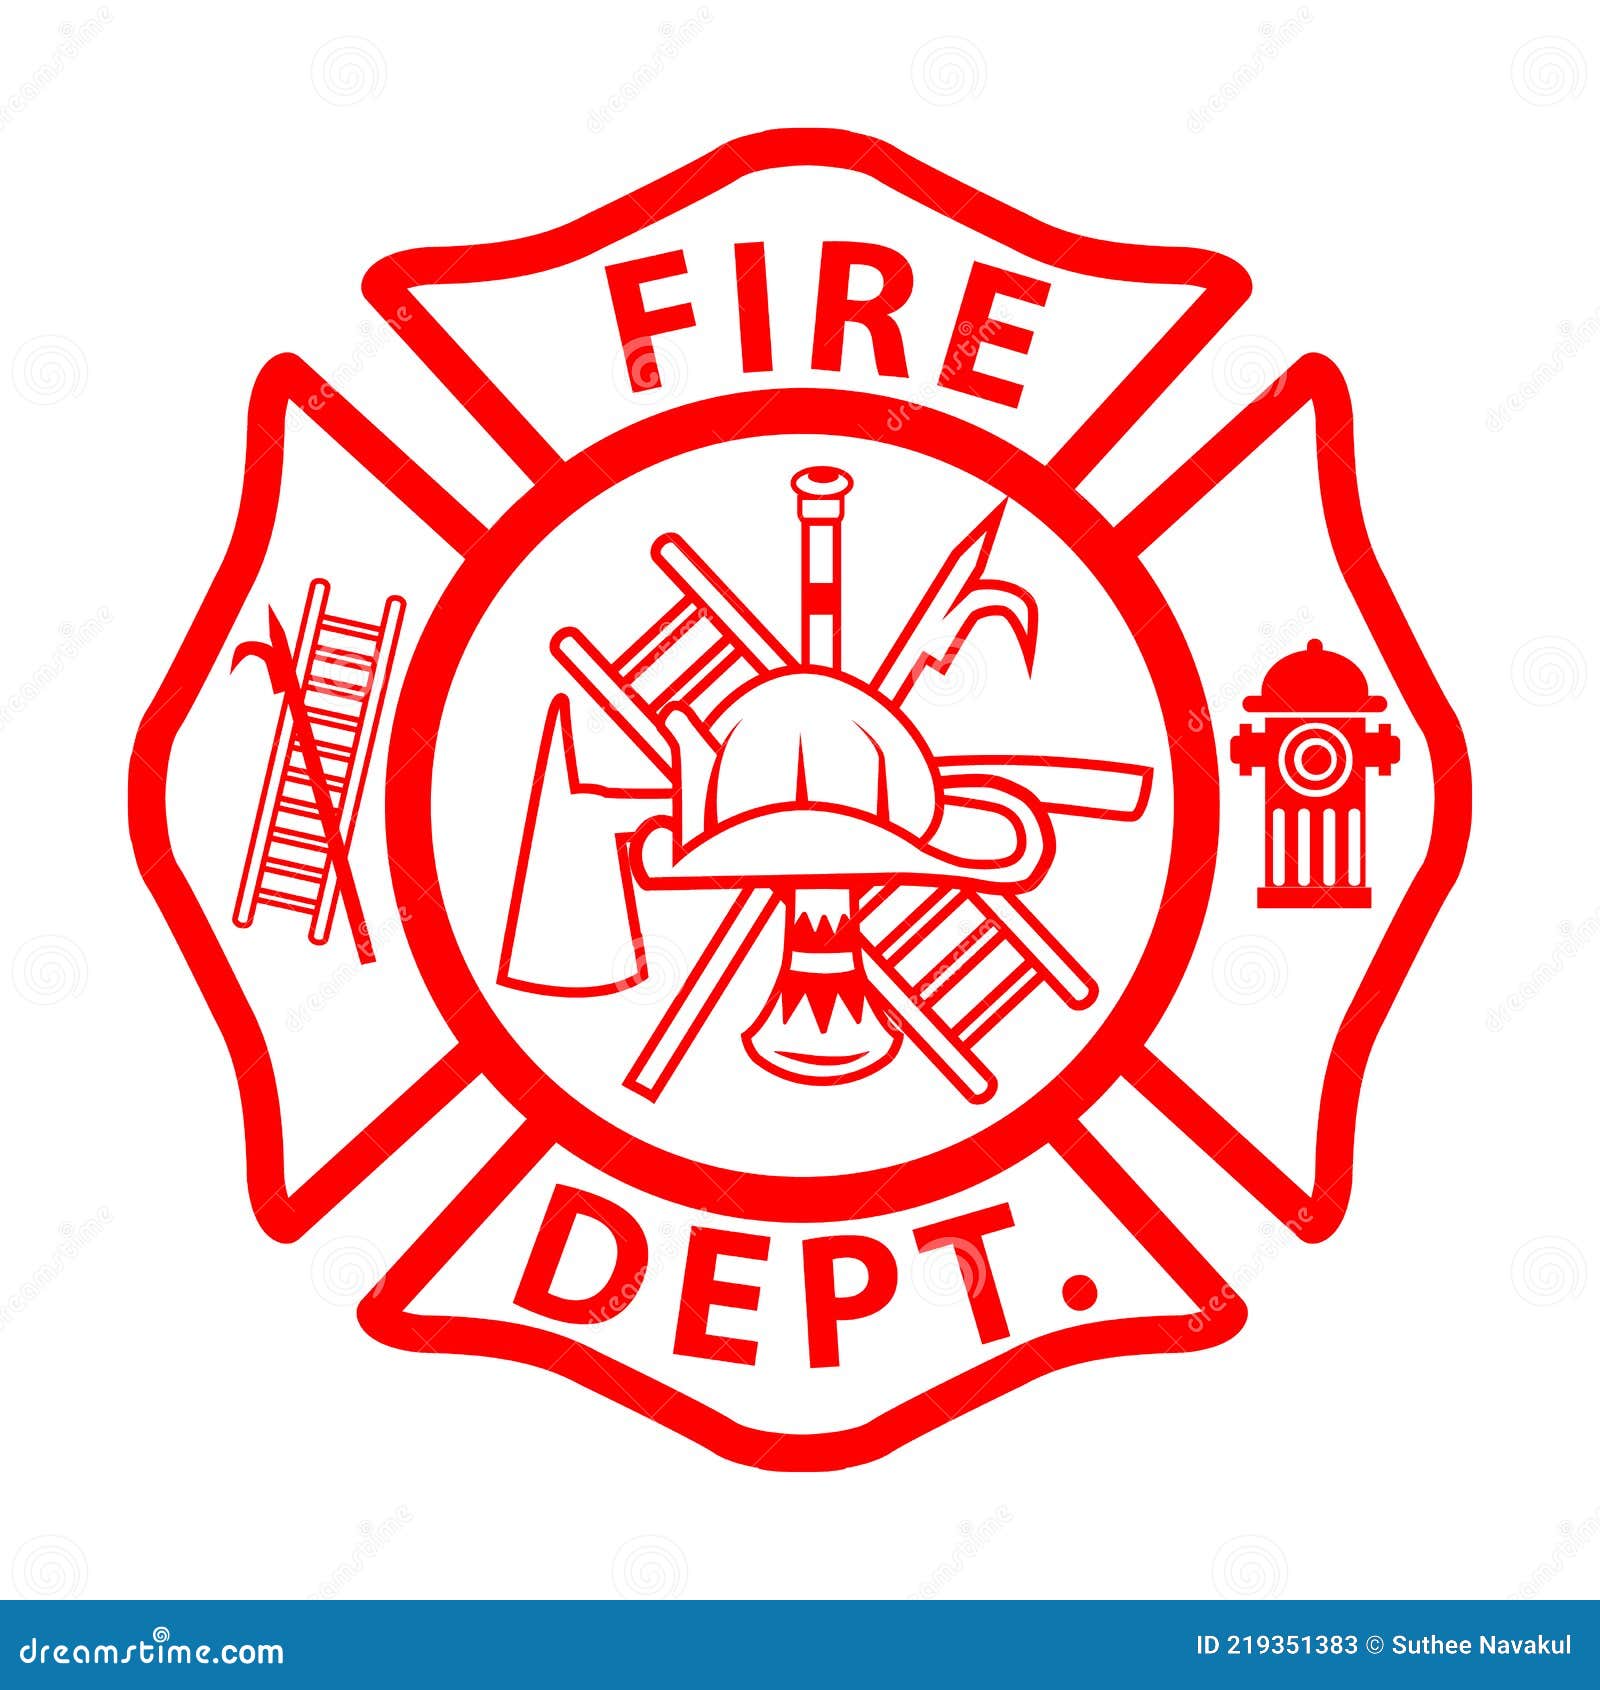 fireman emblem sign on white background. fire department . firefighterÃ¢â¬â¢s maltese cross. flat style